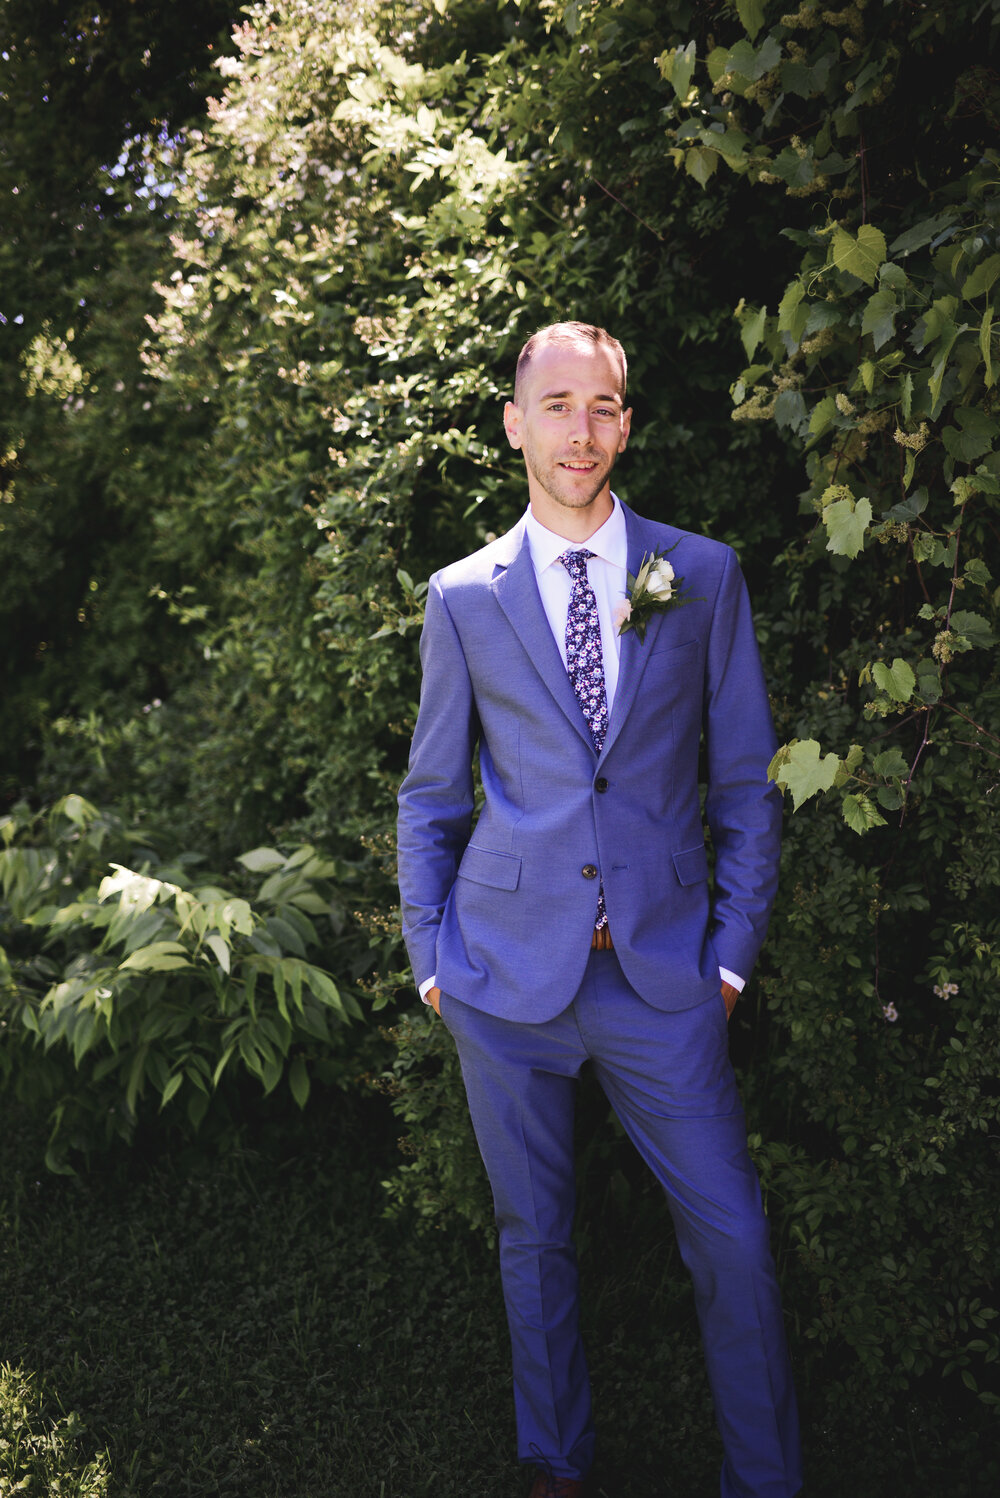 Niagara Falls Ontario Region Wedding Photographer (20).jpg